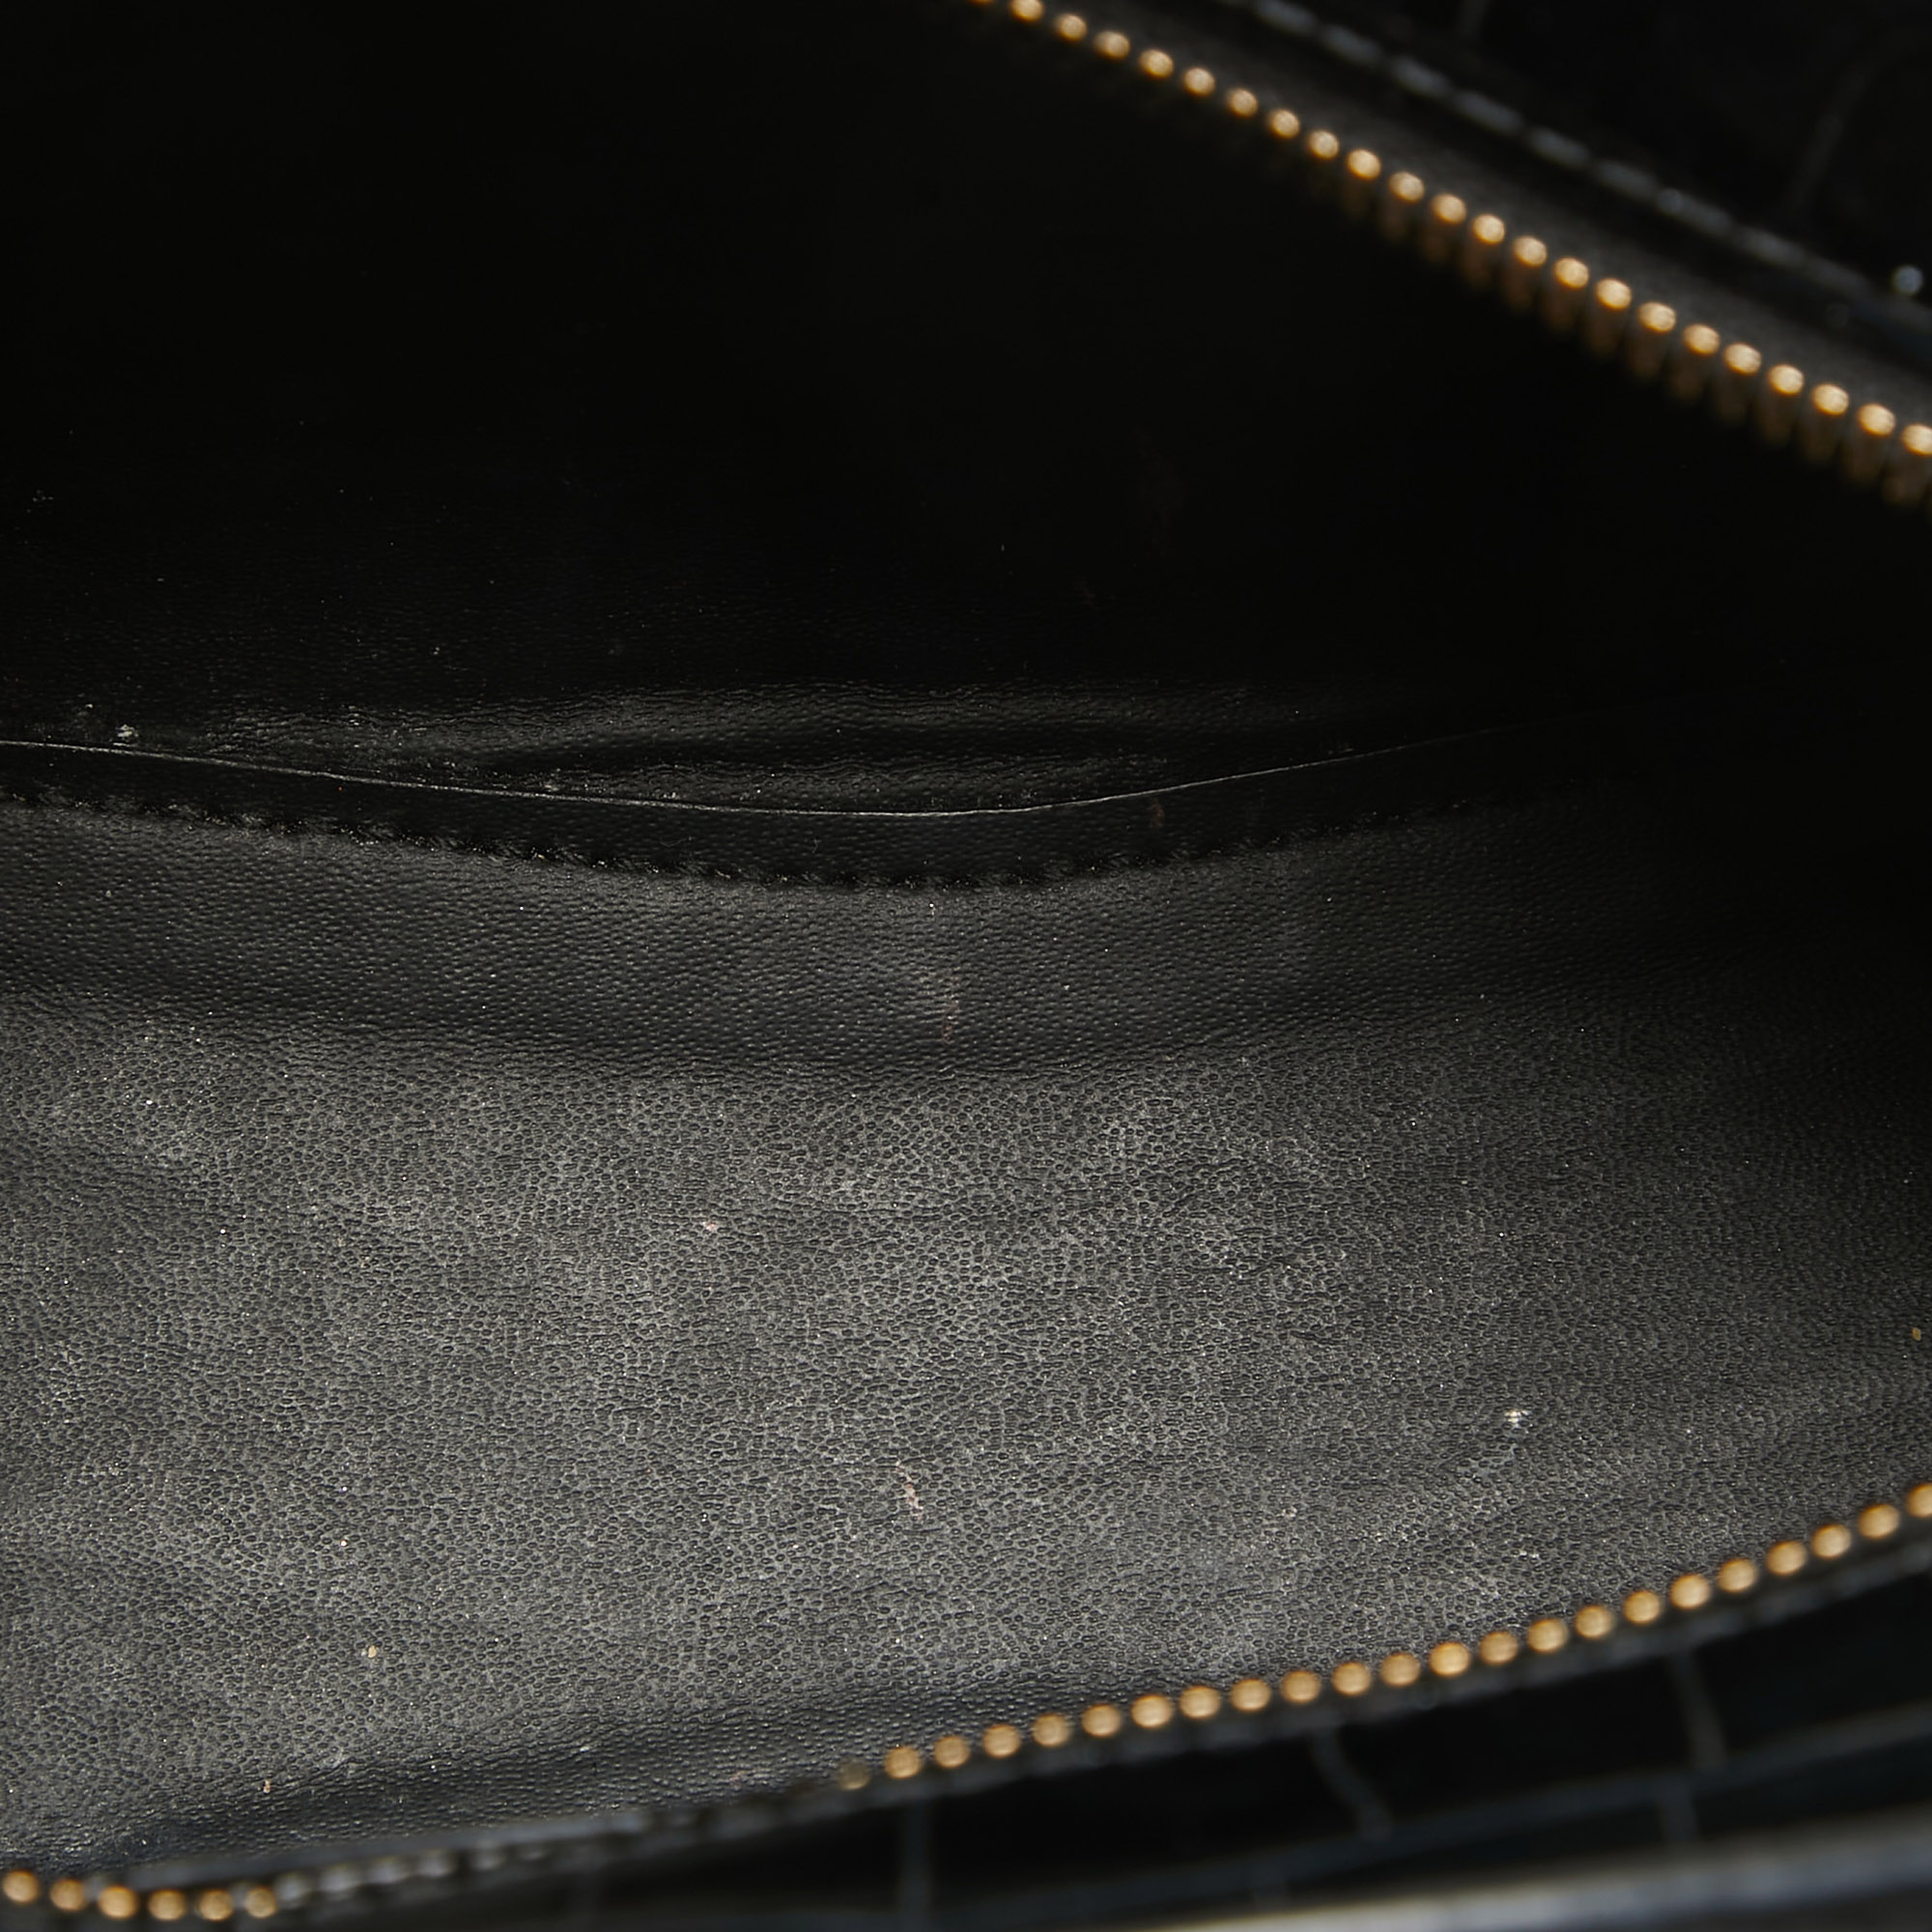 Balenciaga Black Croc Embossed Leather Mini Neo Classic Bag